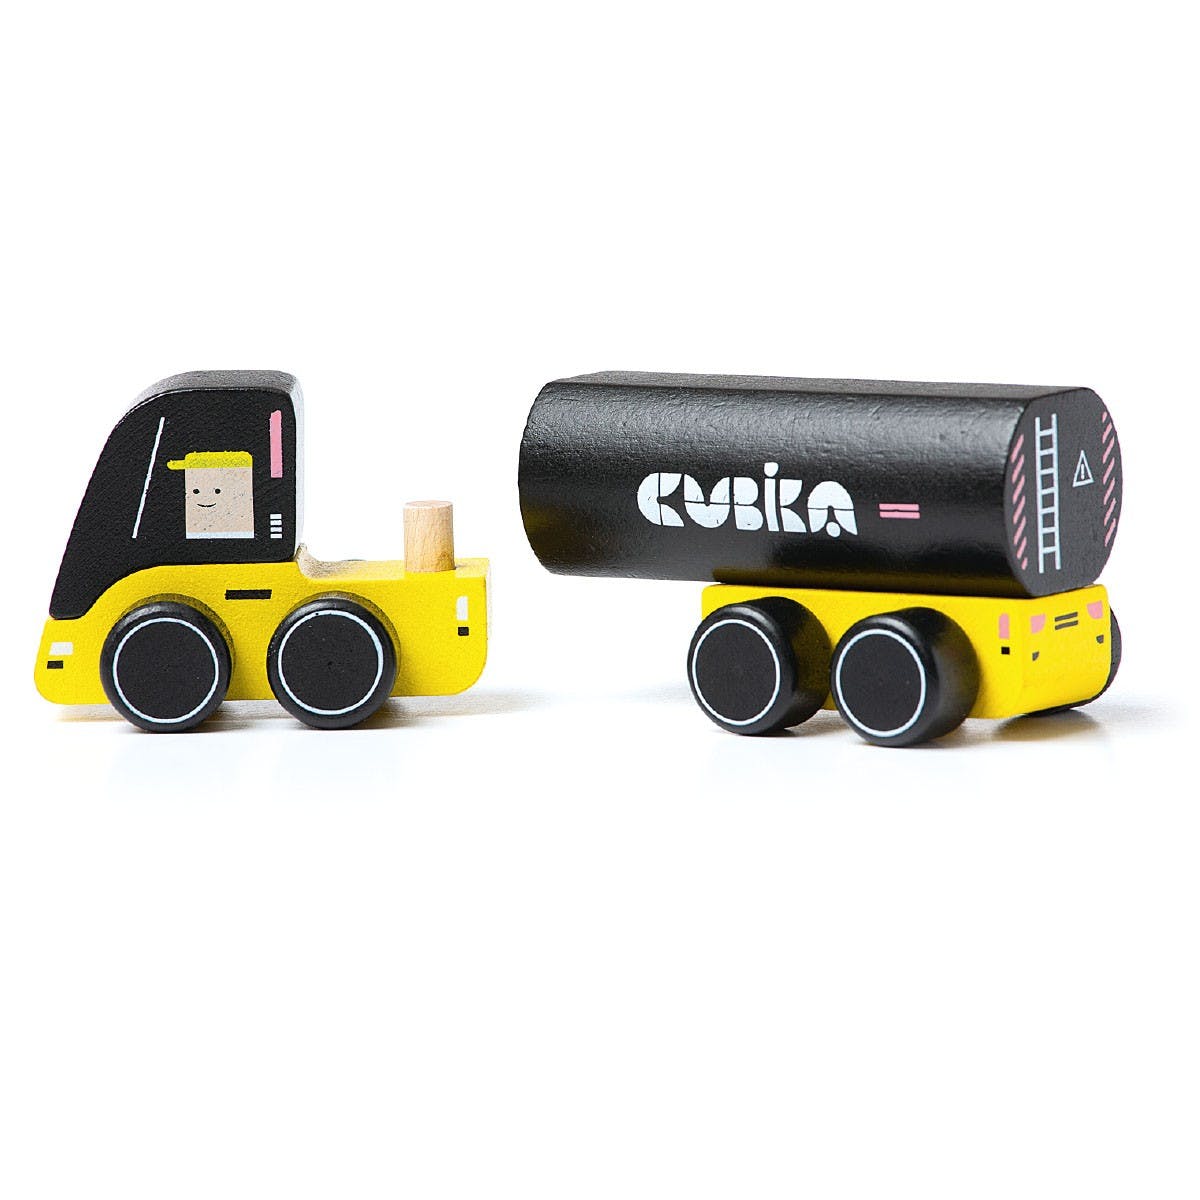 Cubika - Wooden toy-truck "Cubika 1" - Playlaan